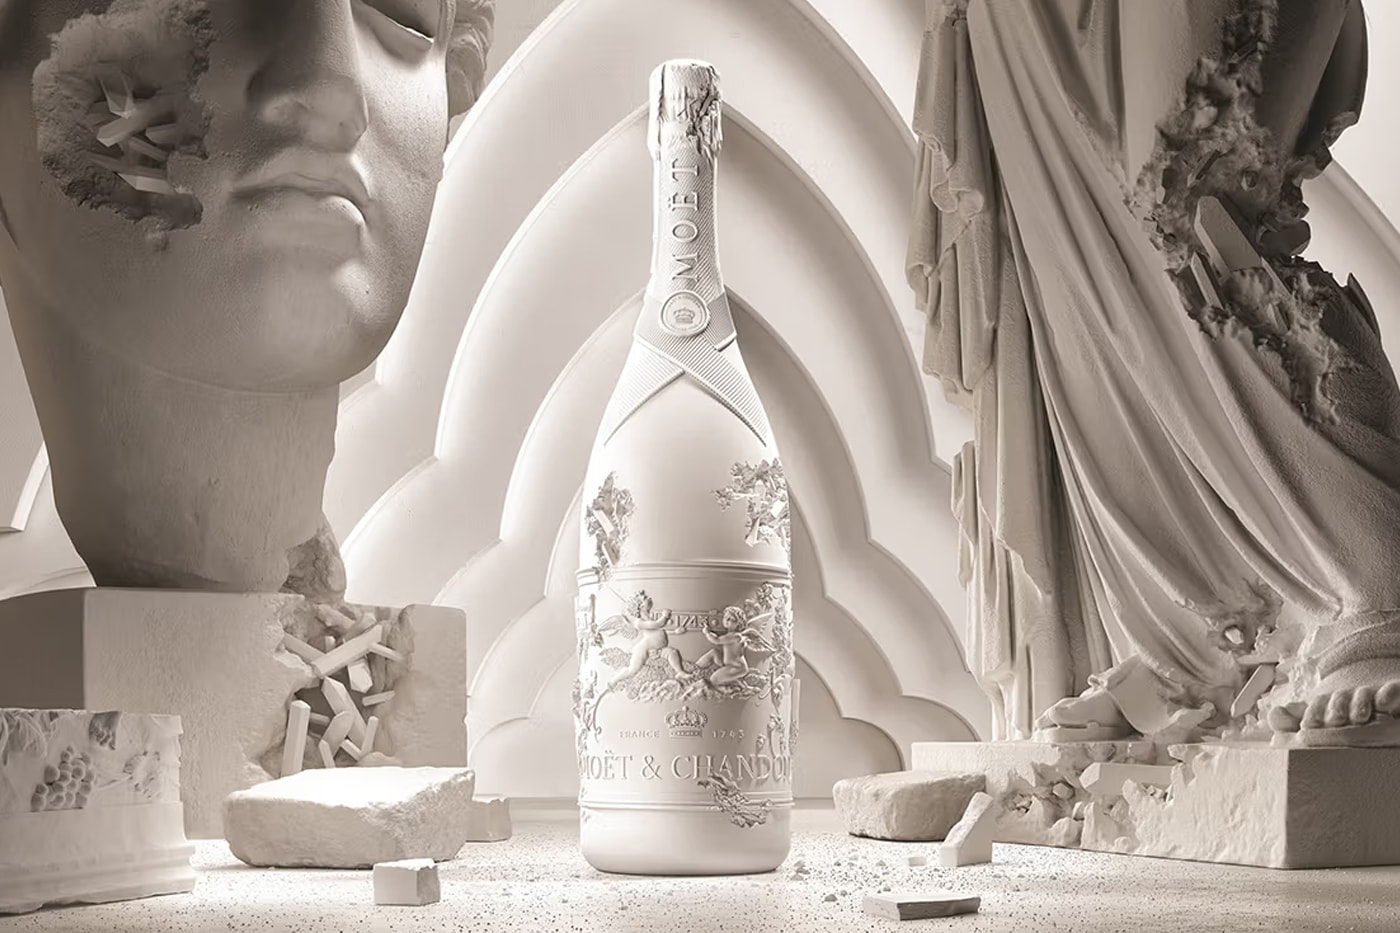 Daniel Arsham Celebrates 280th Hypebeast Anniversary | Edition Special Bottle Chandon & Moët